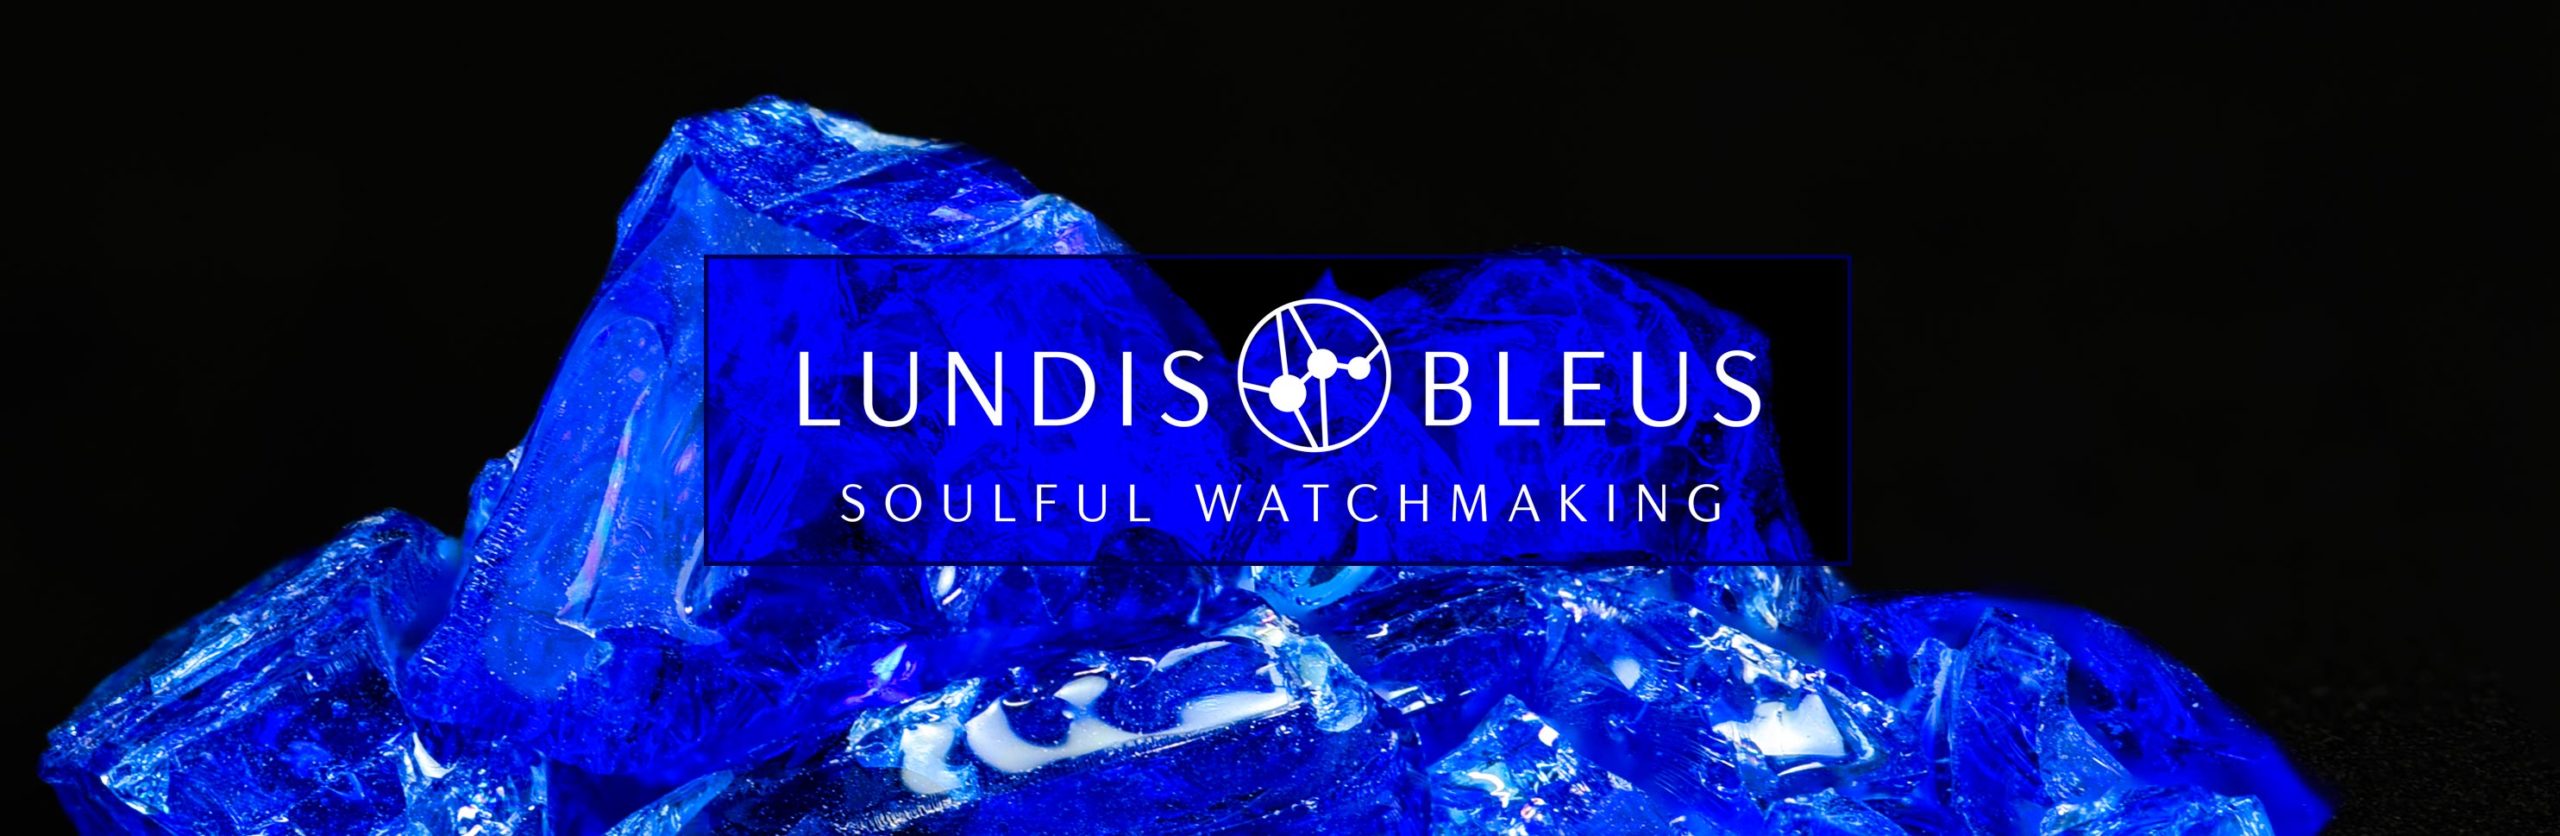 Lundis Bleus - Discover Us